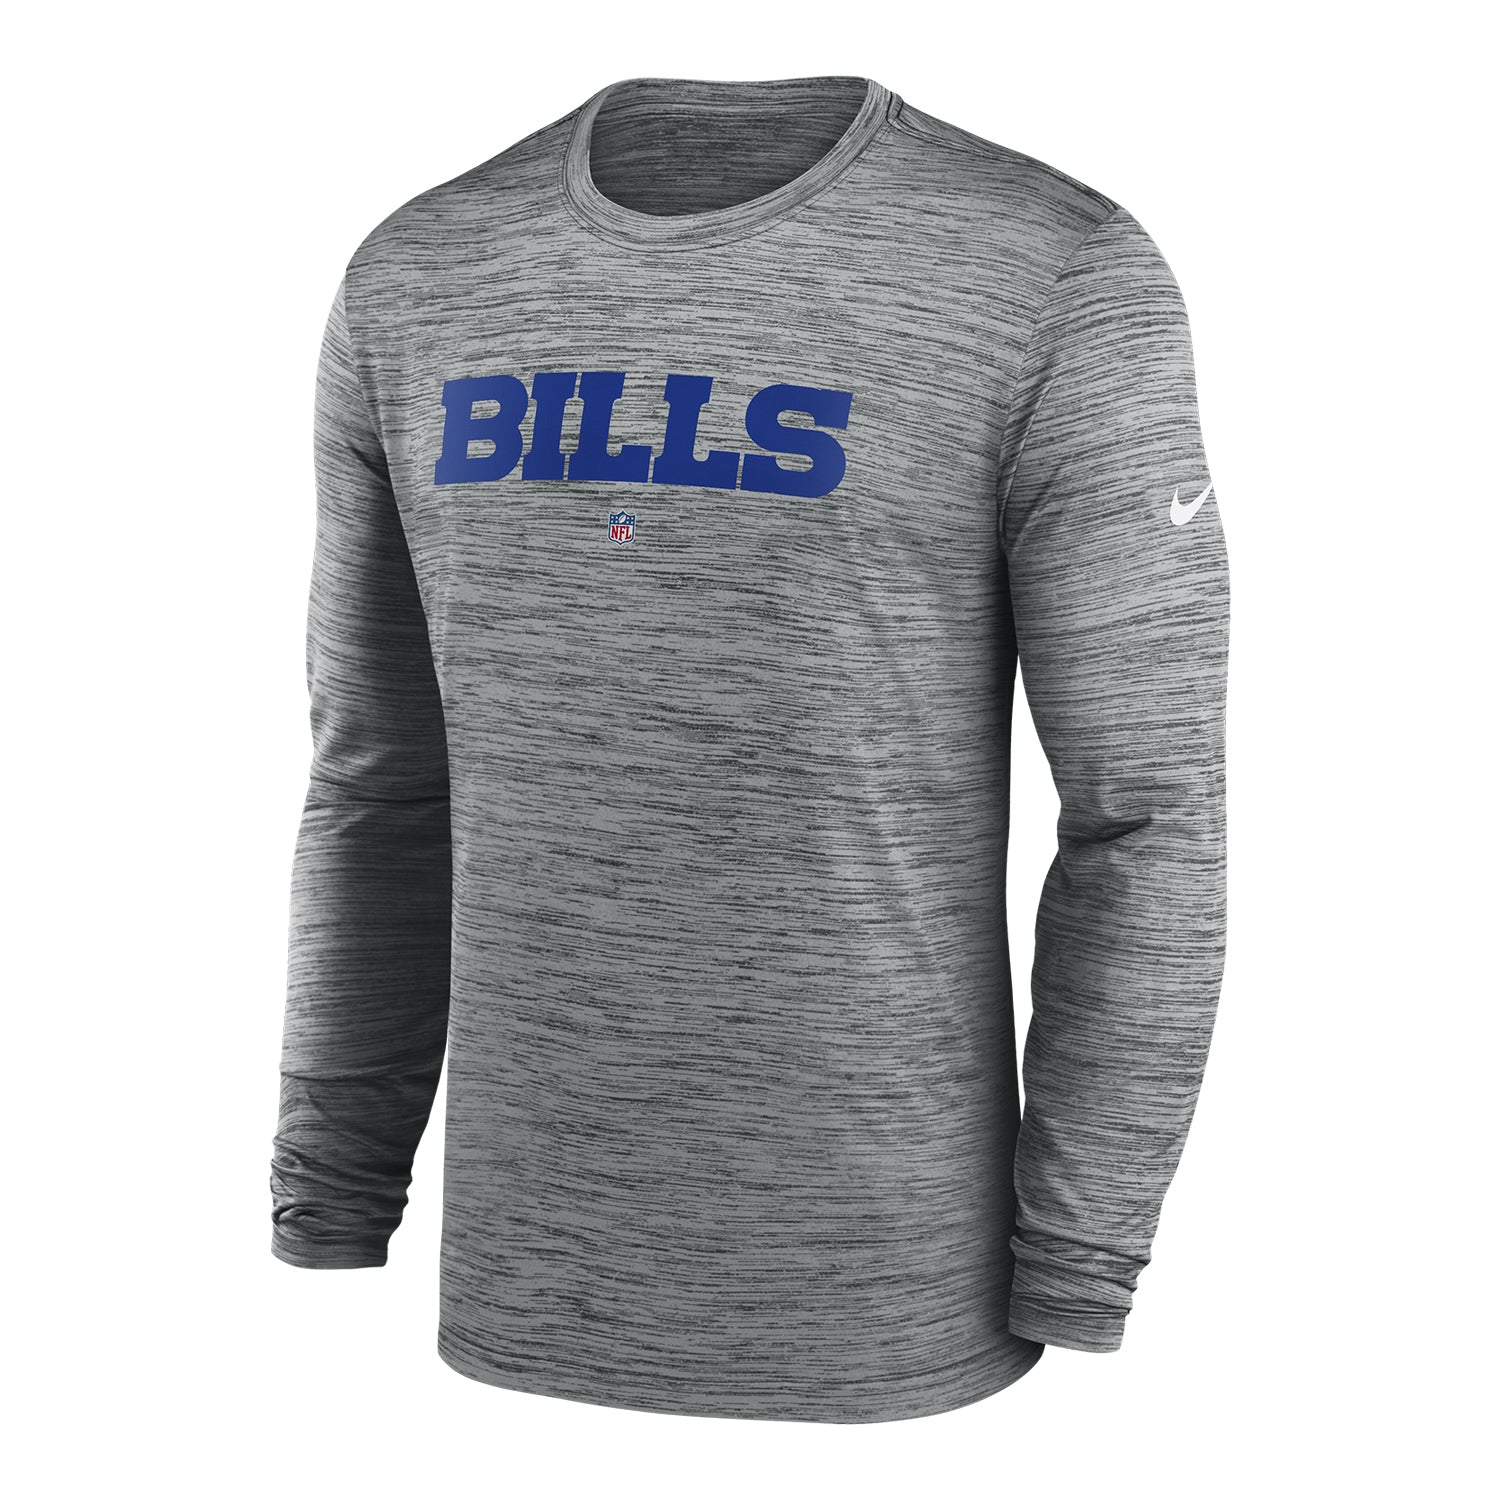 Buffalo Bills Men's Shirts | The Bills Store